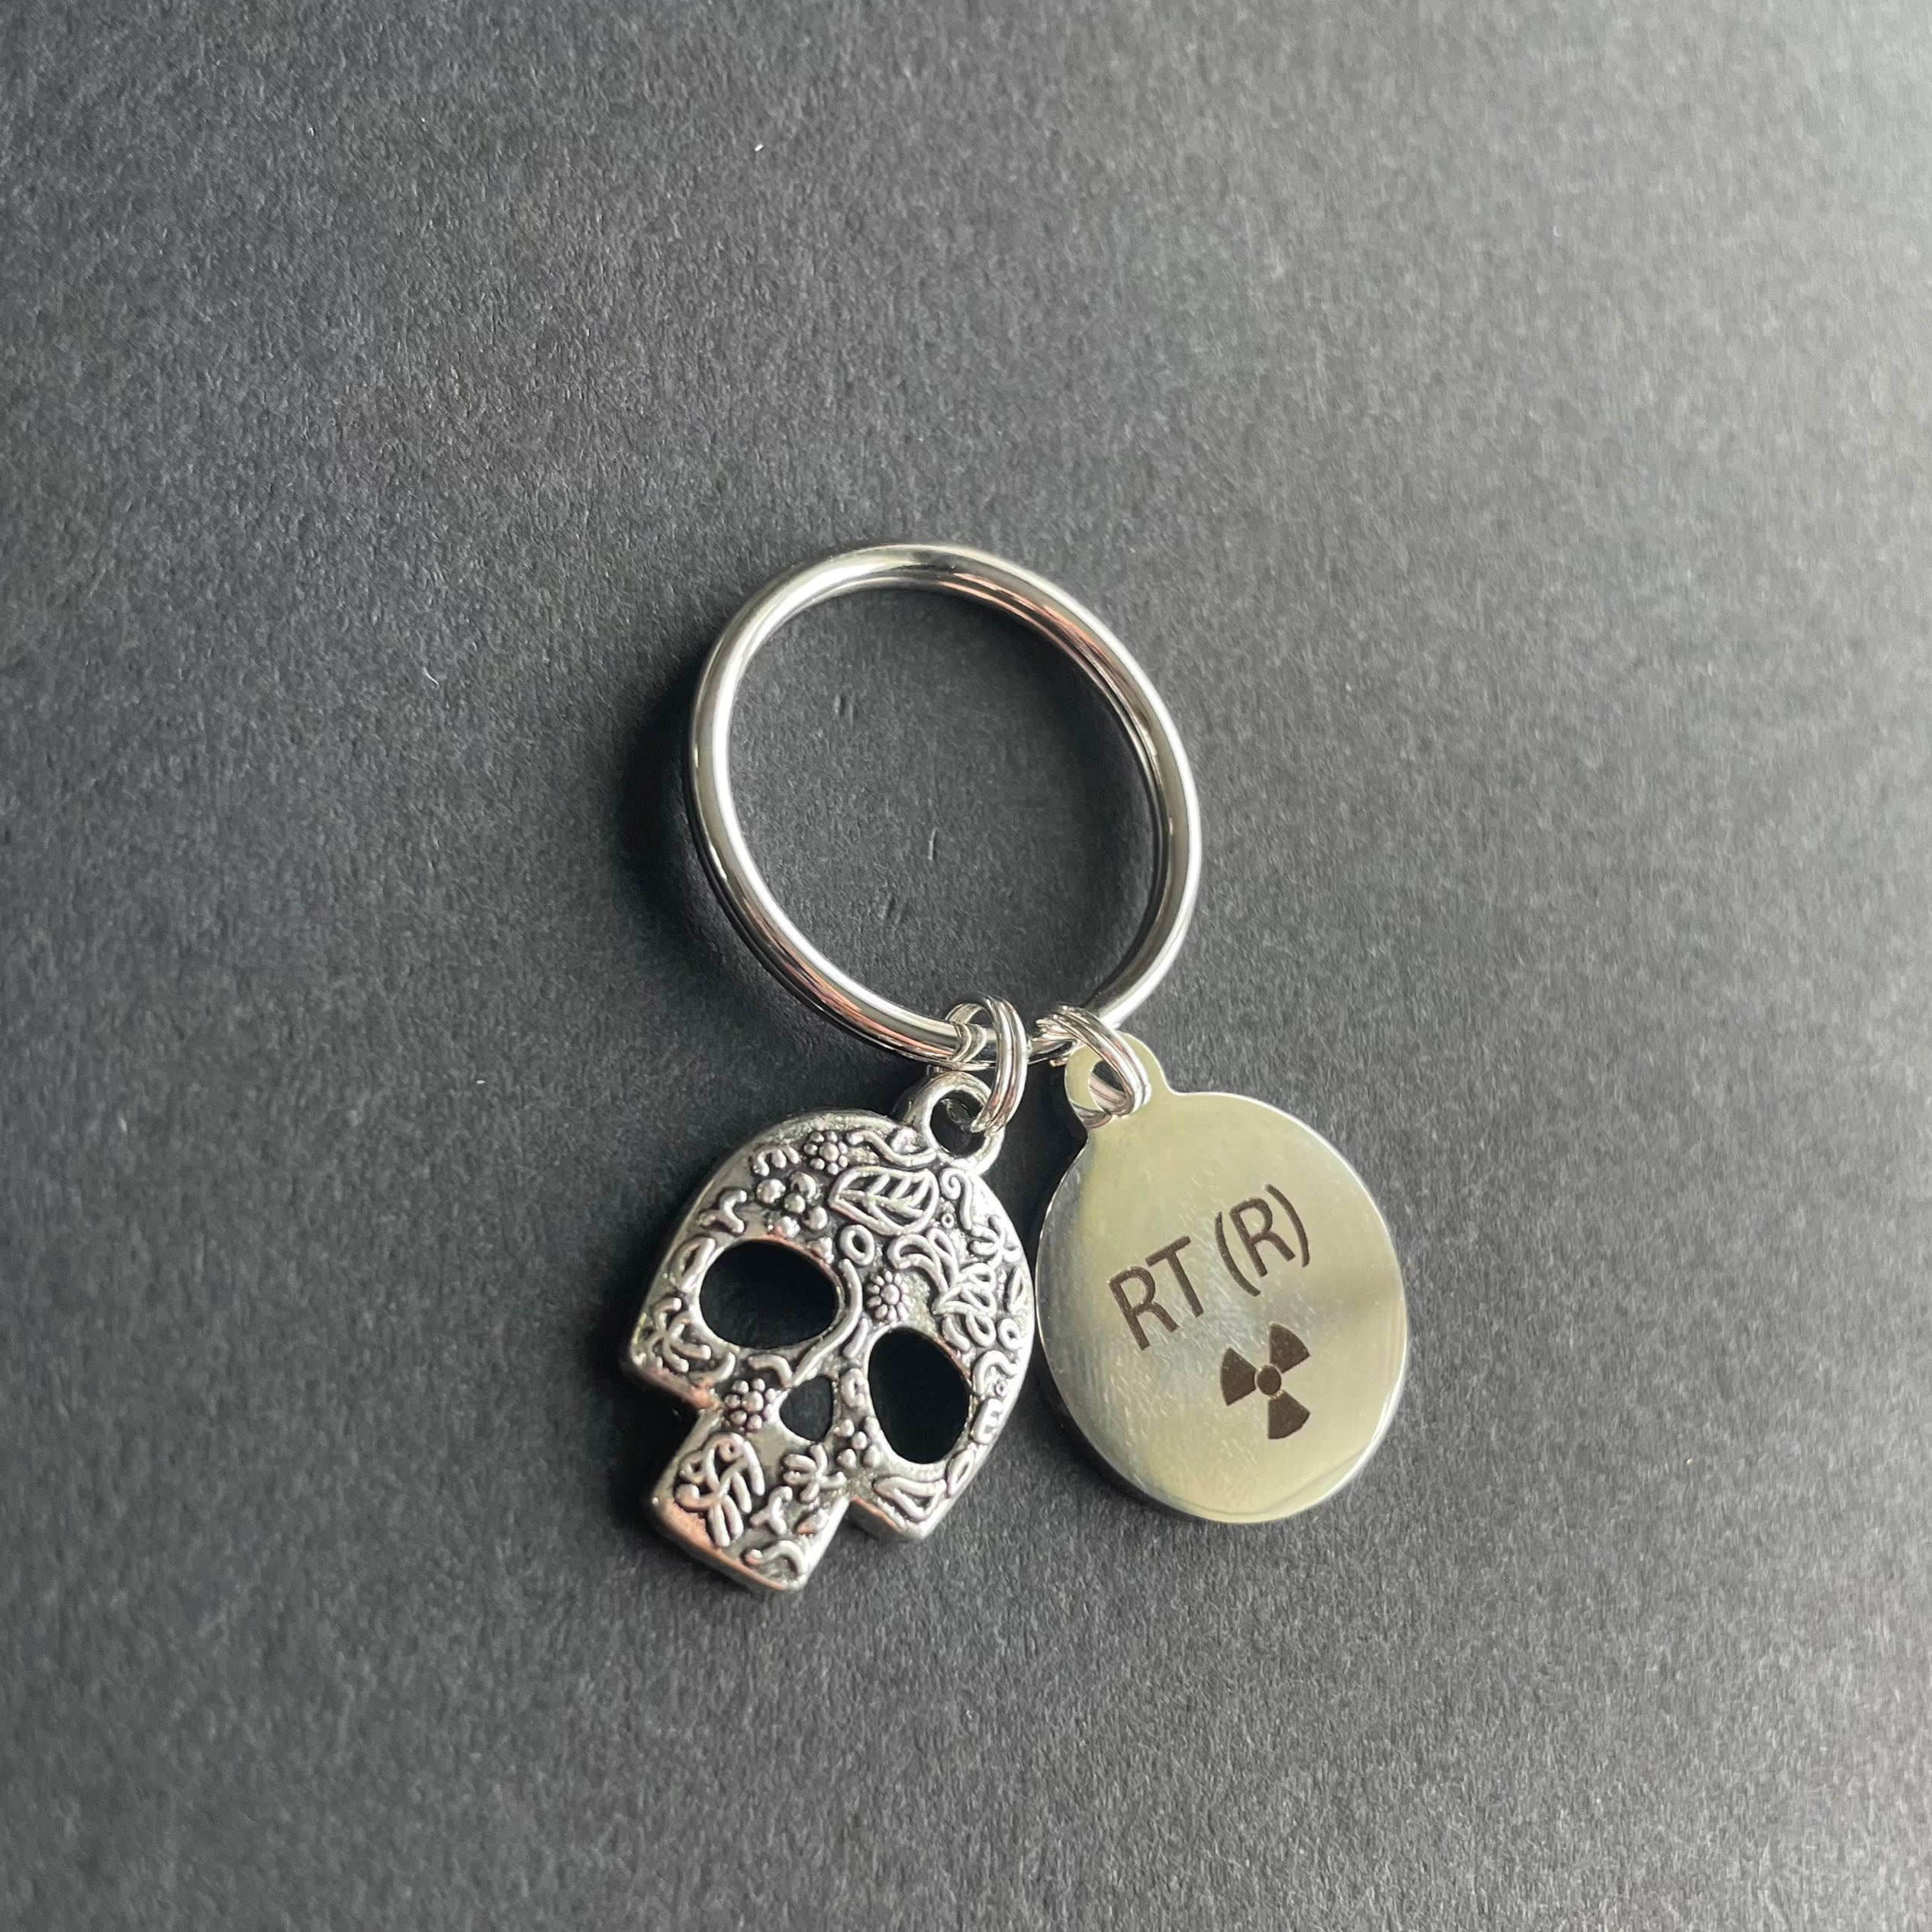 RT(R) Charm and Skull Key Chain, Radiology, Xray Tech, Gift